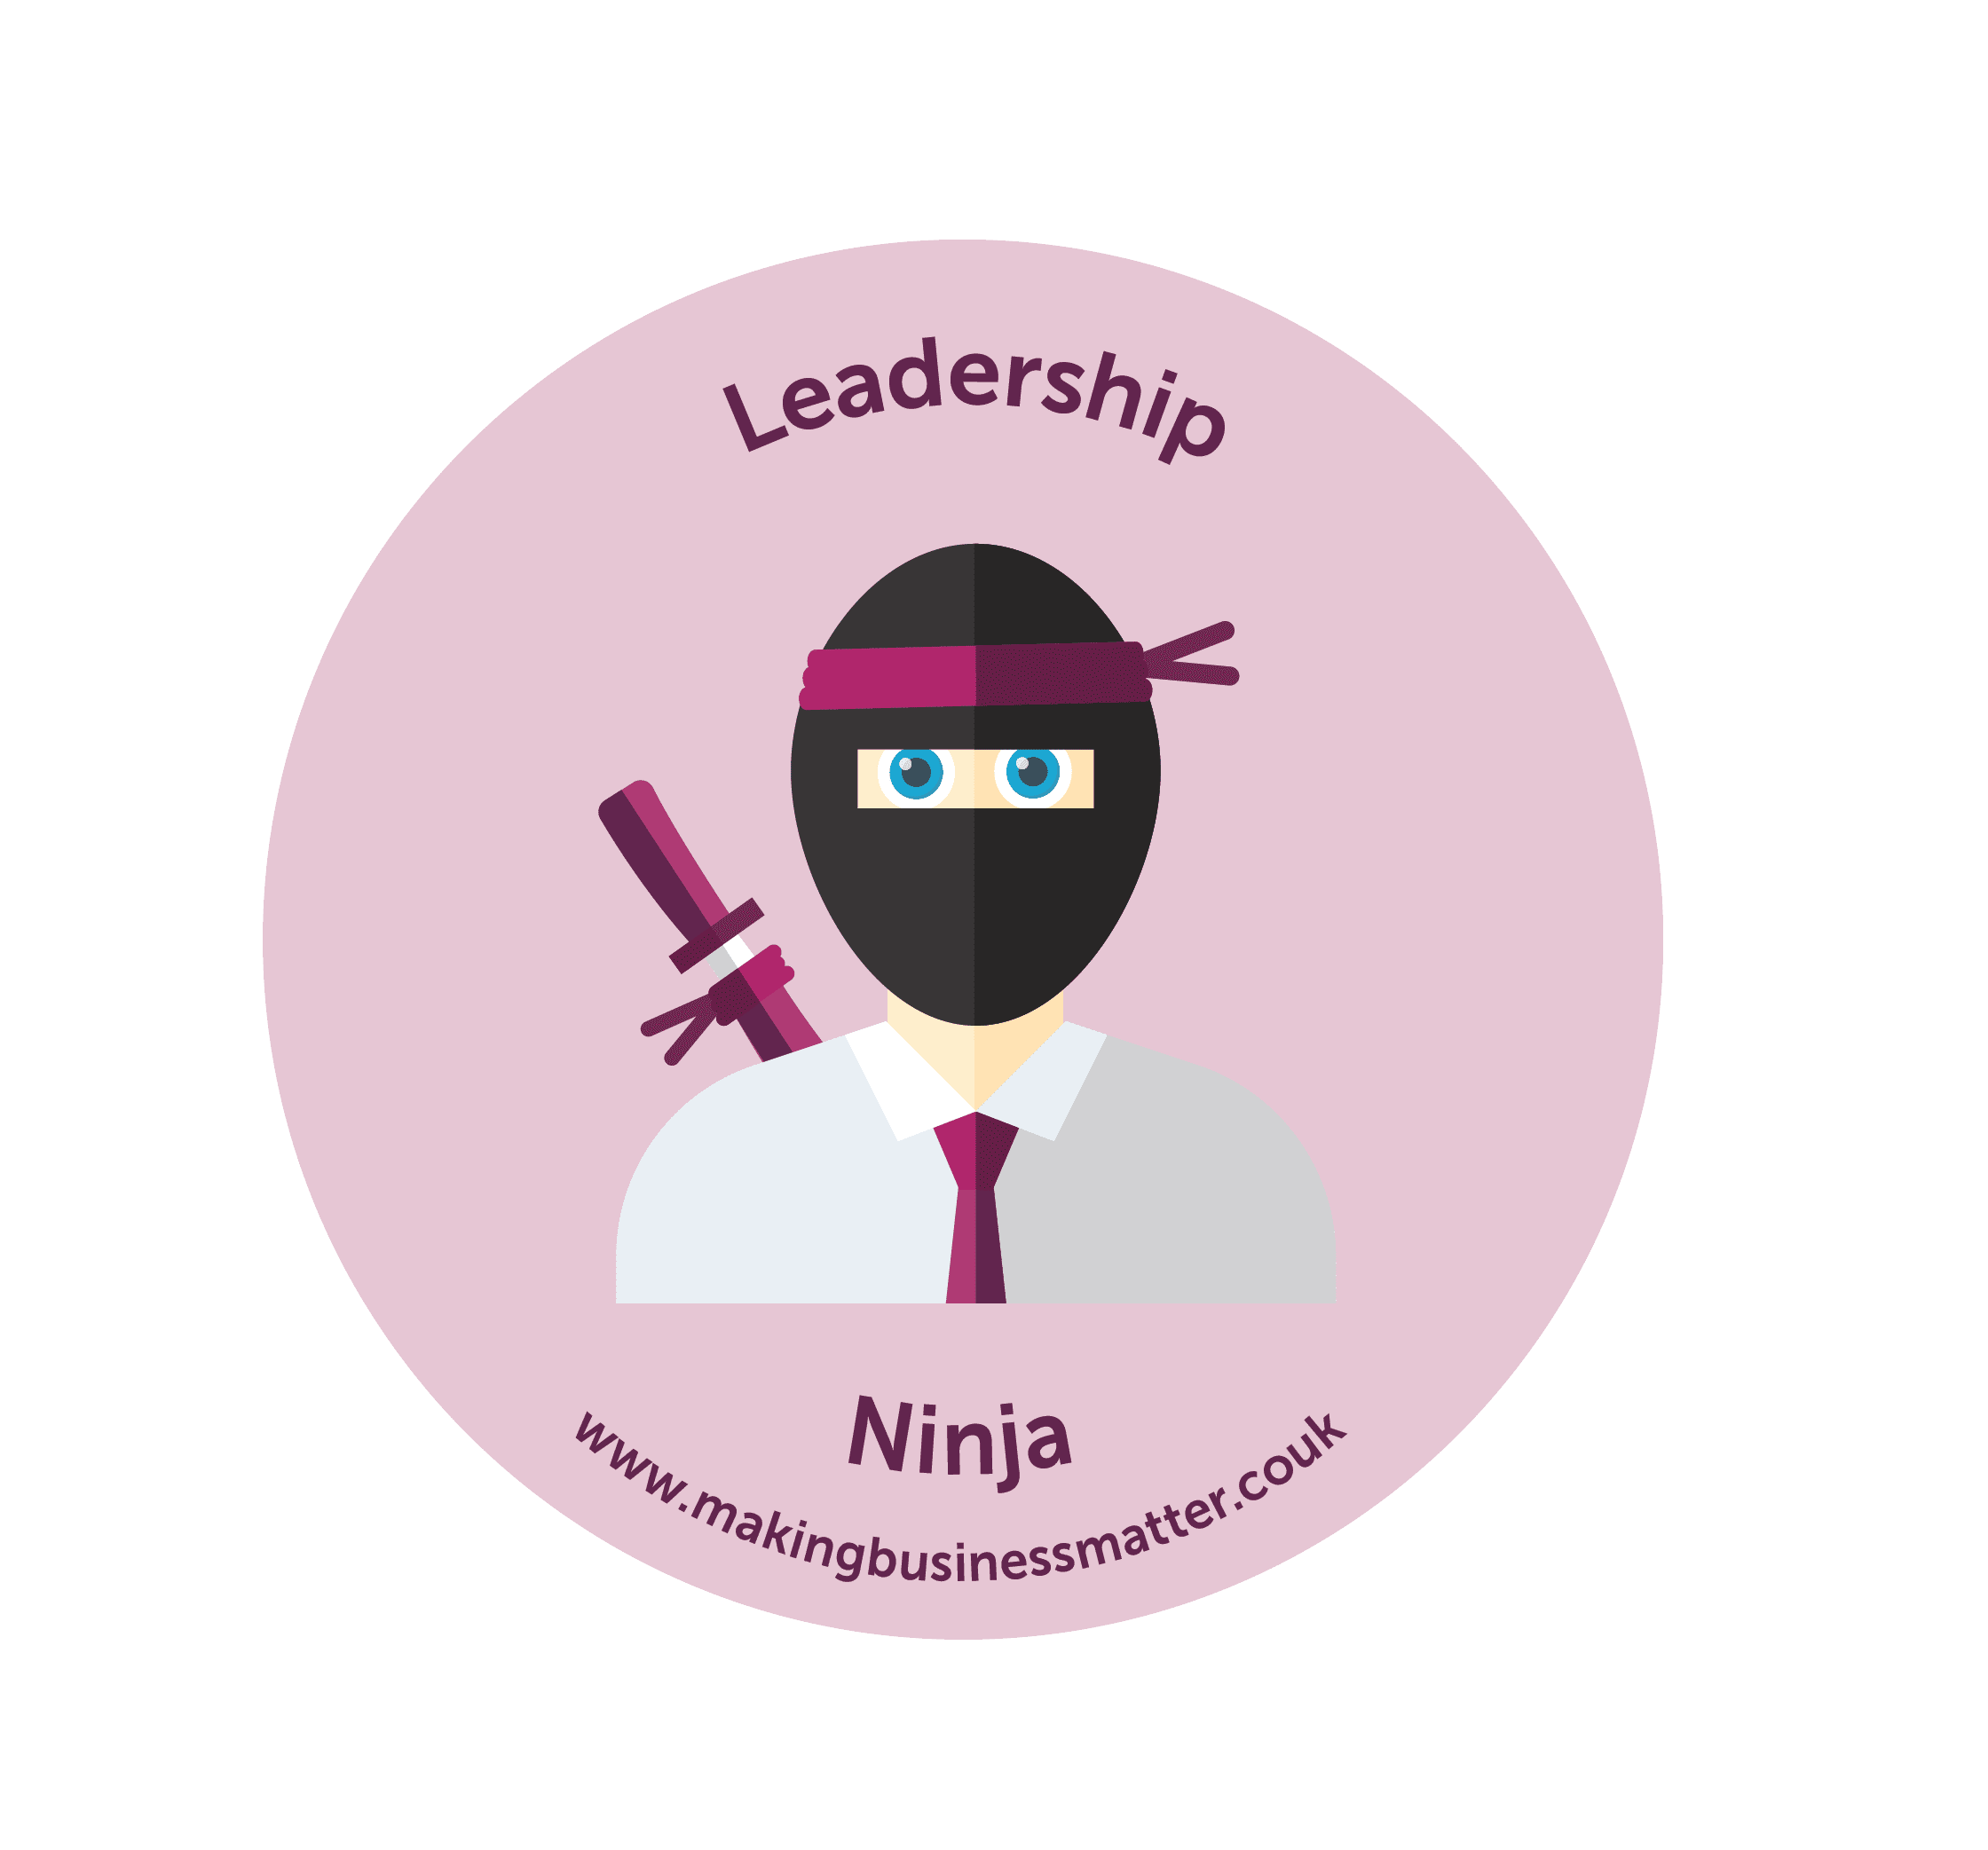 Cartoon ninja in tie on a pink sticker